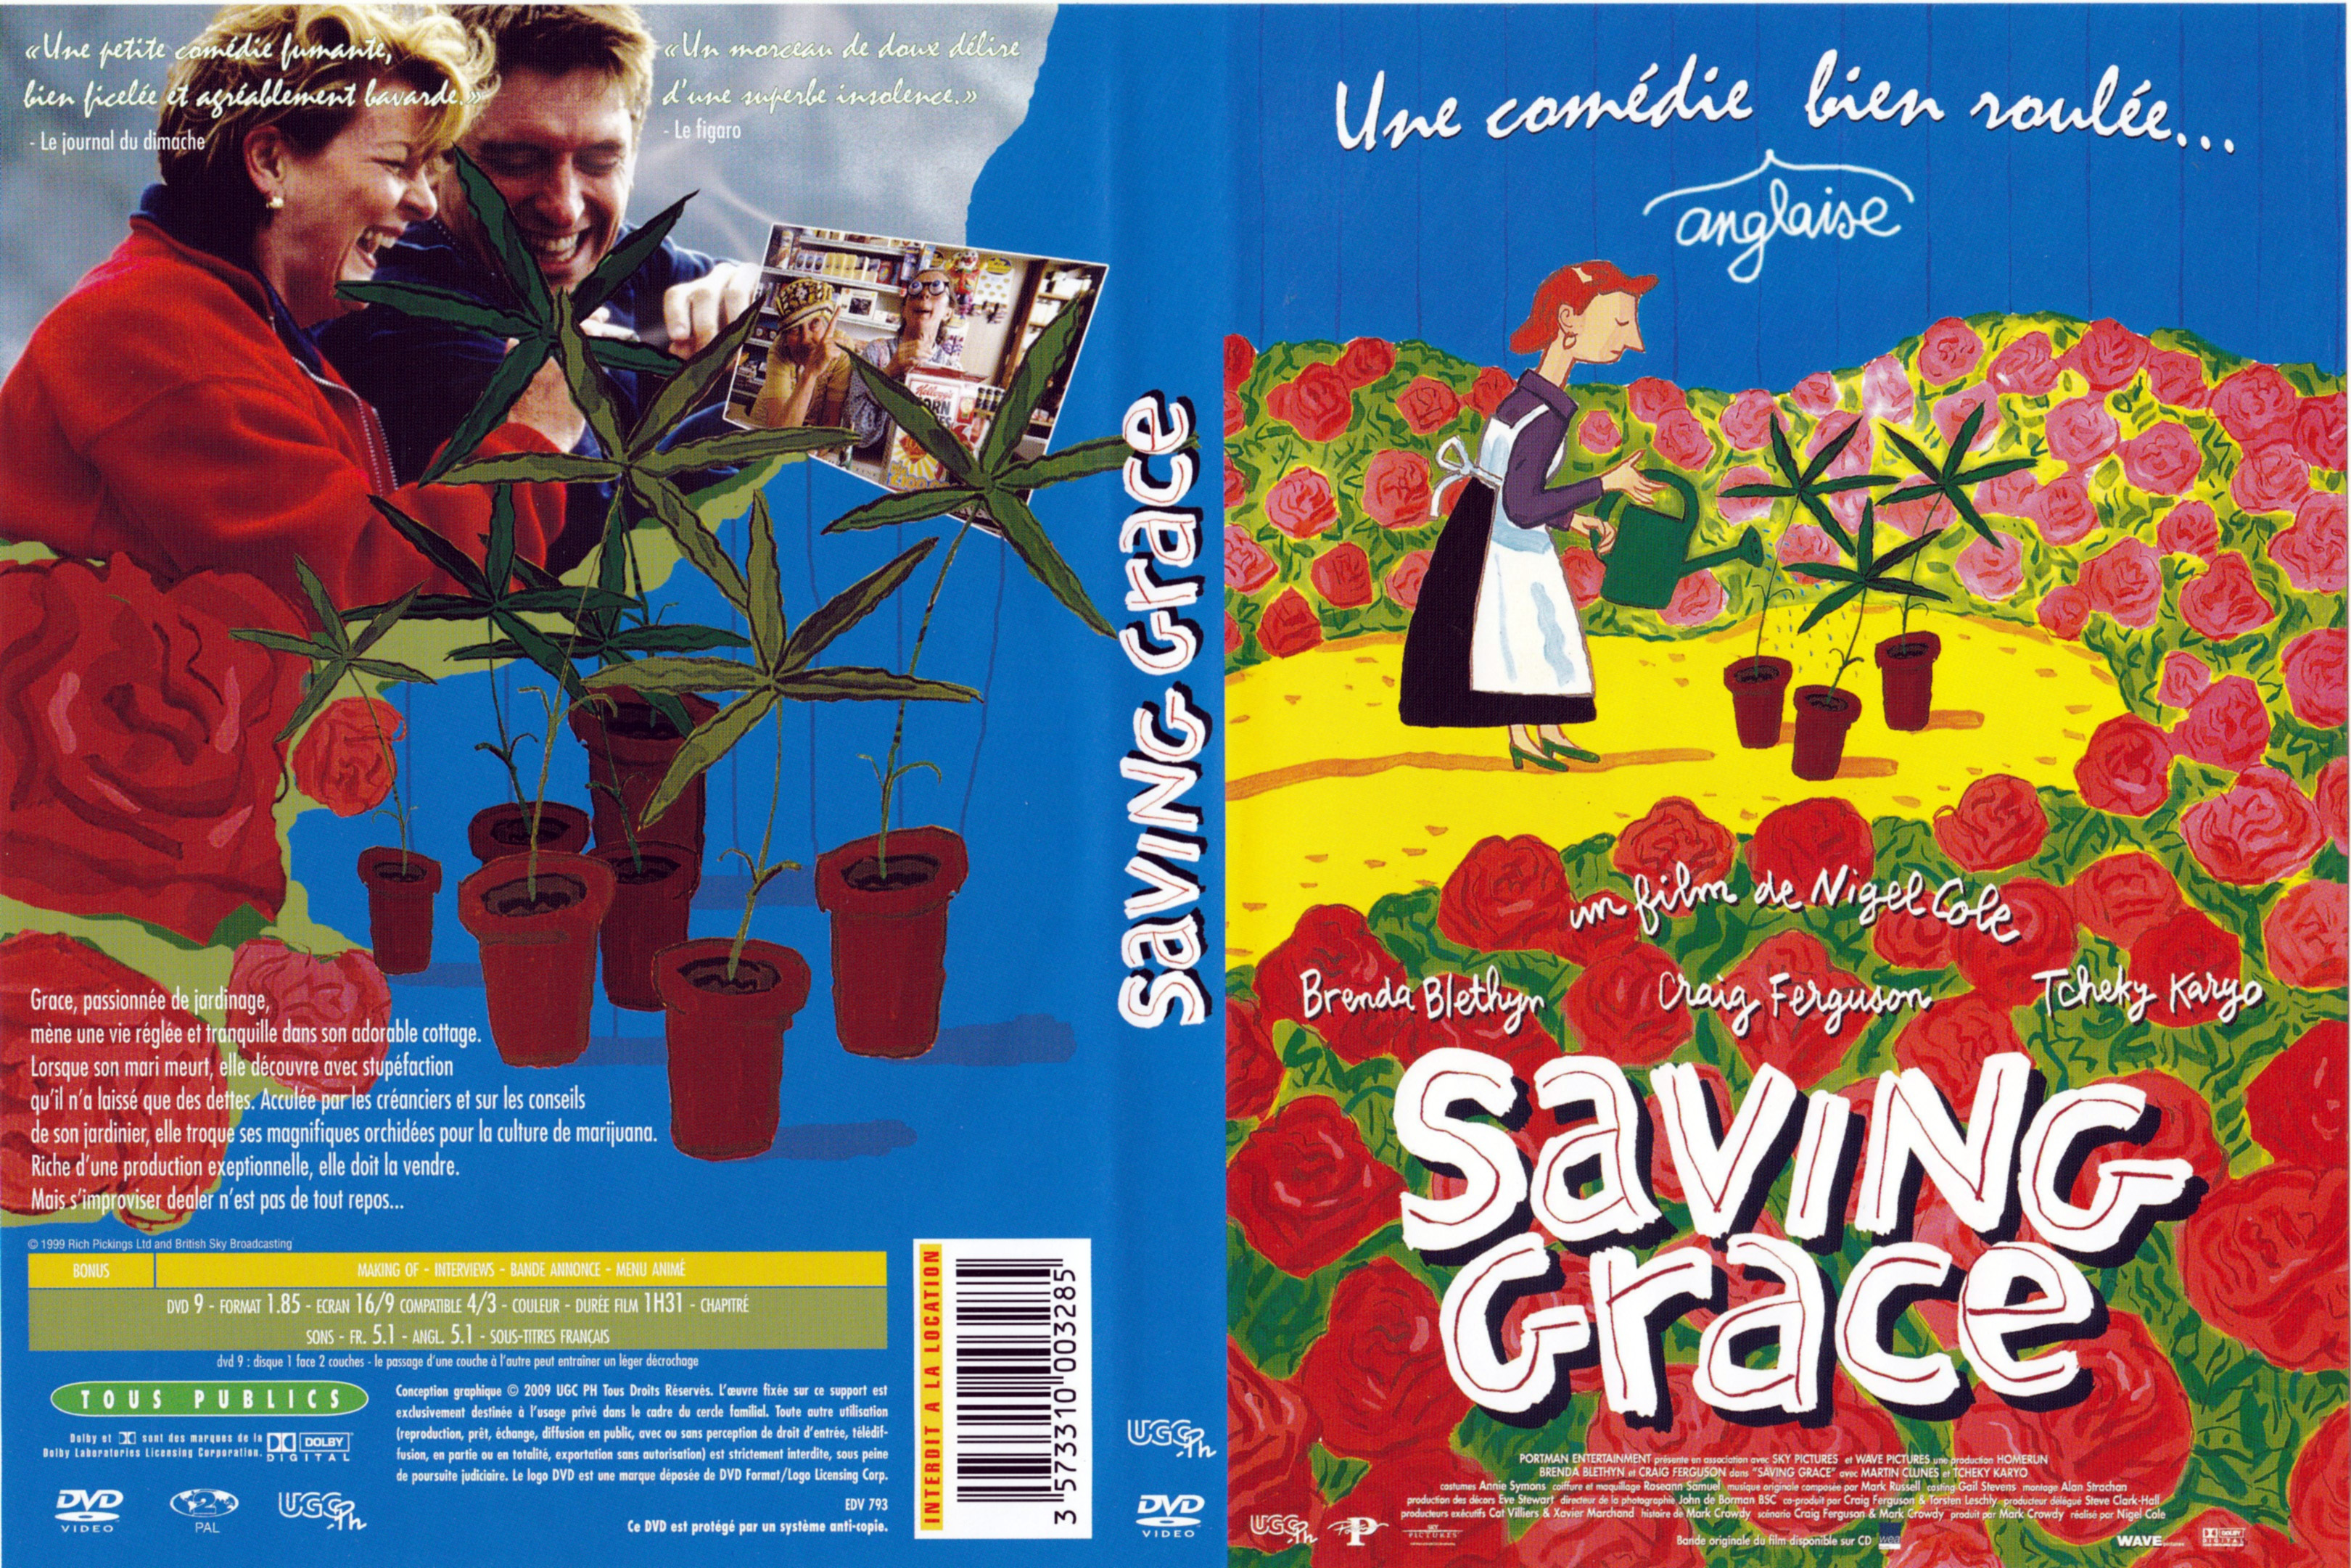 Jaquette DVD Saving Grace v2